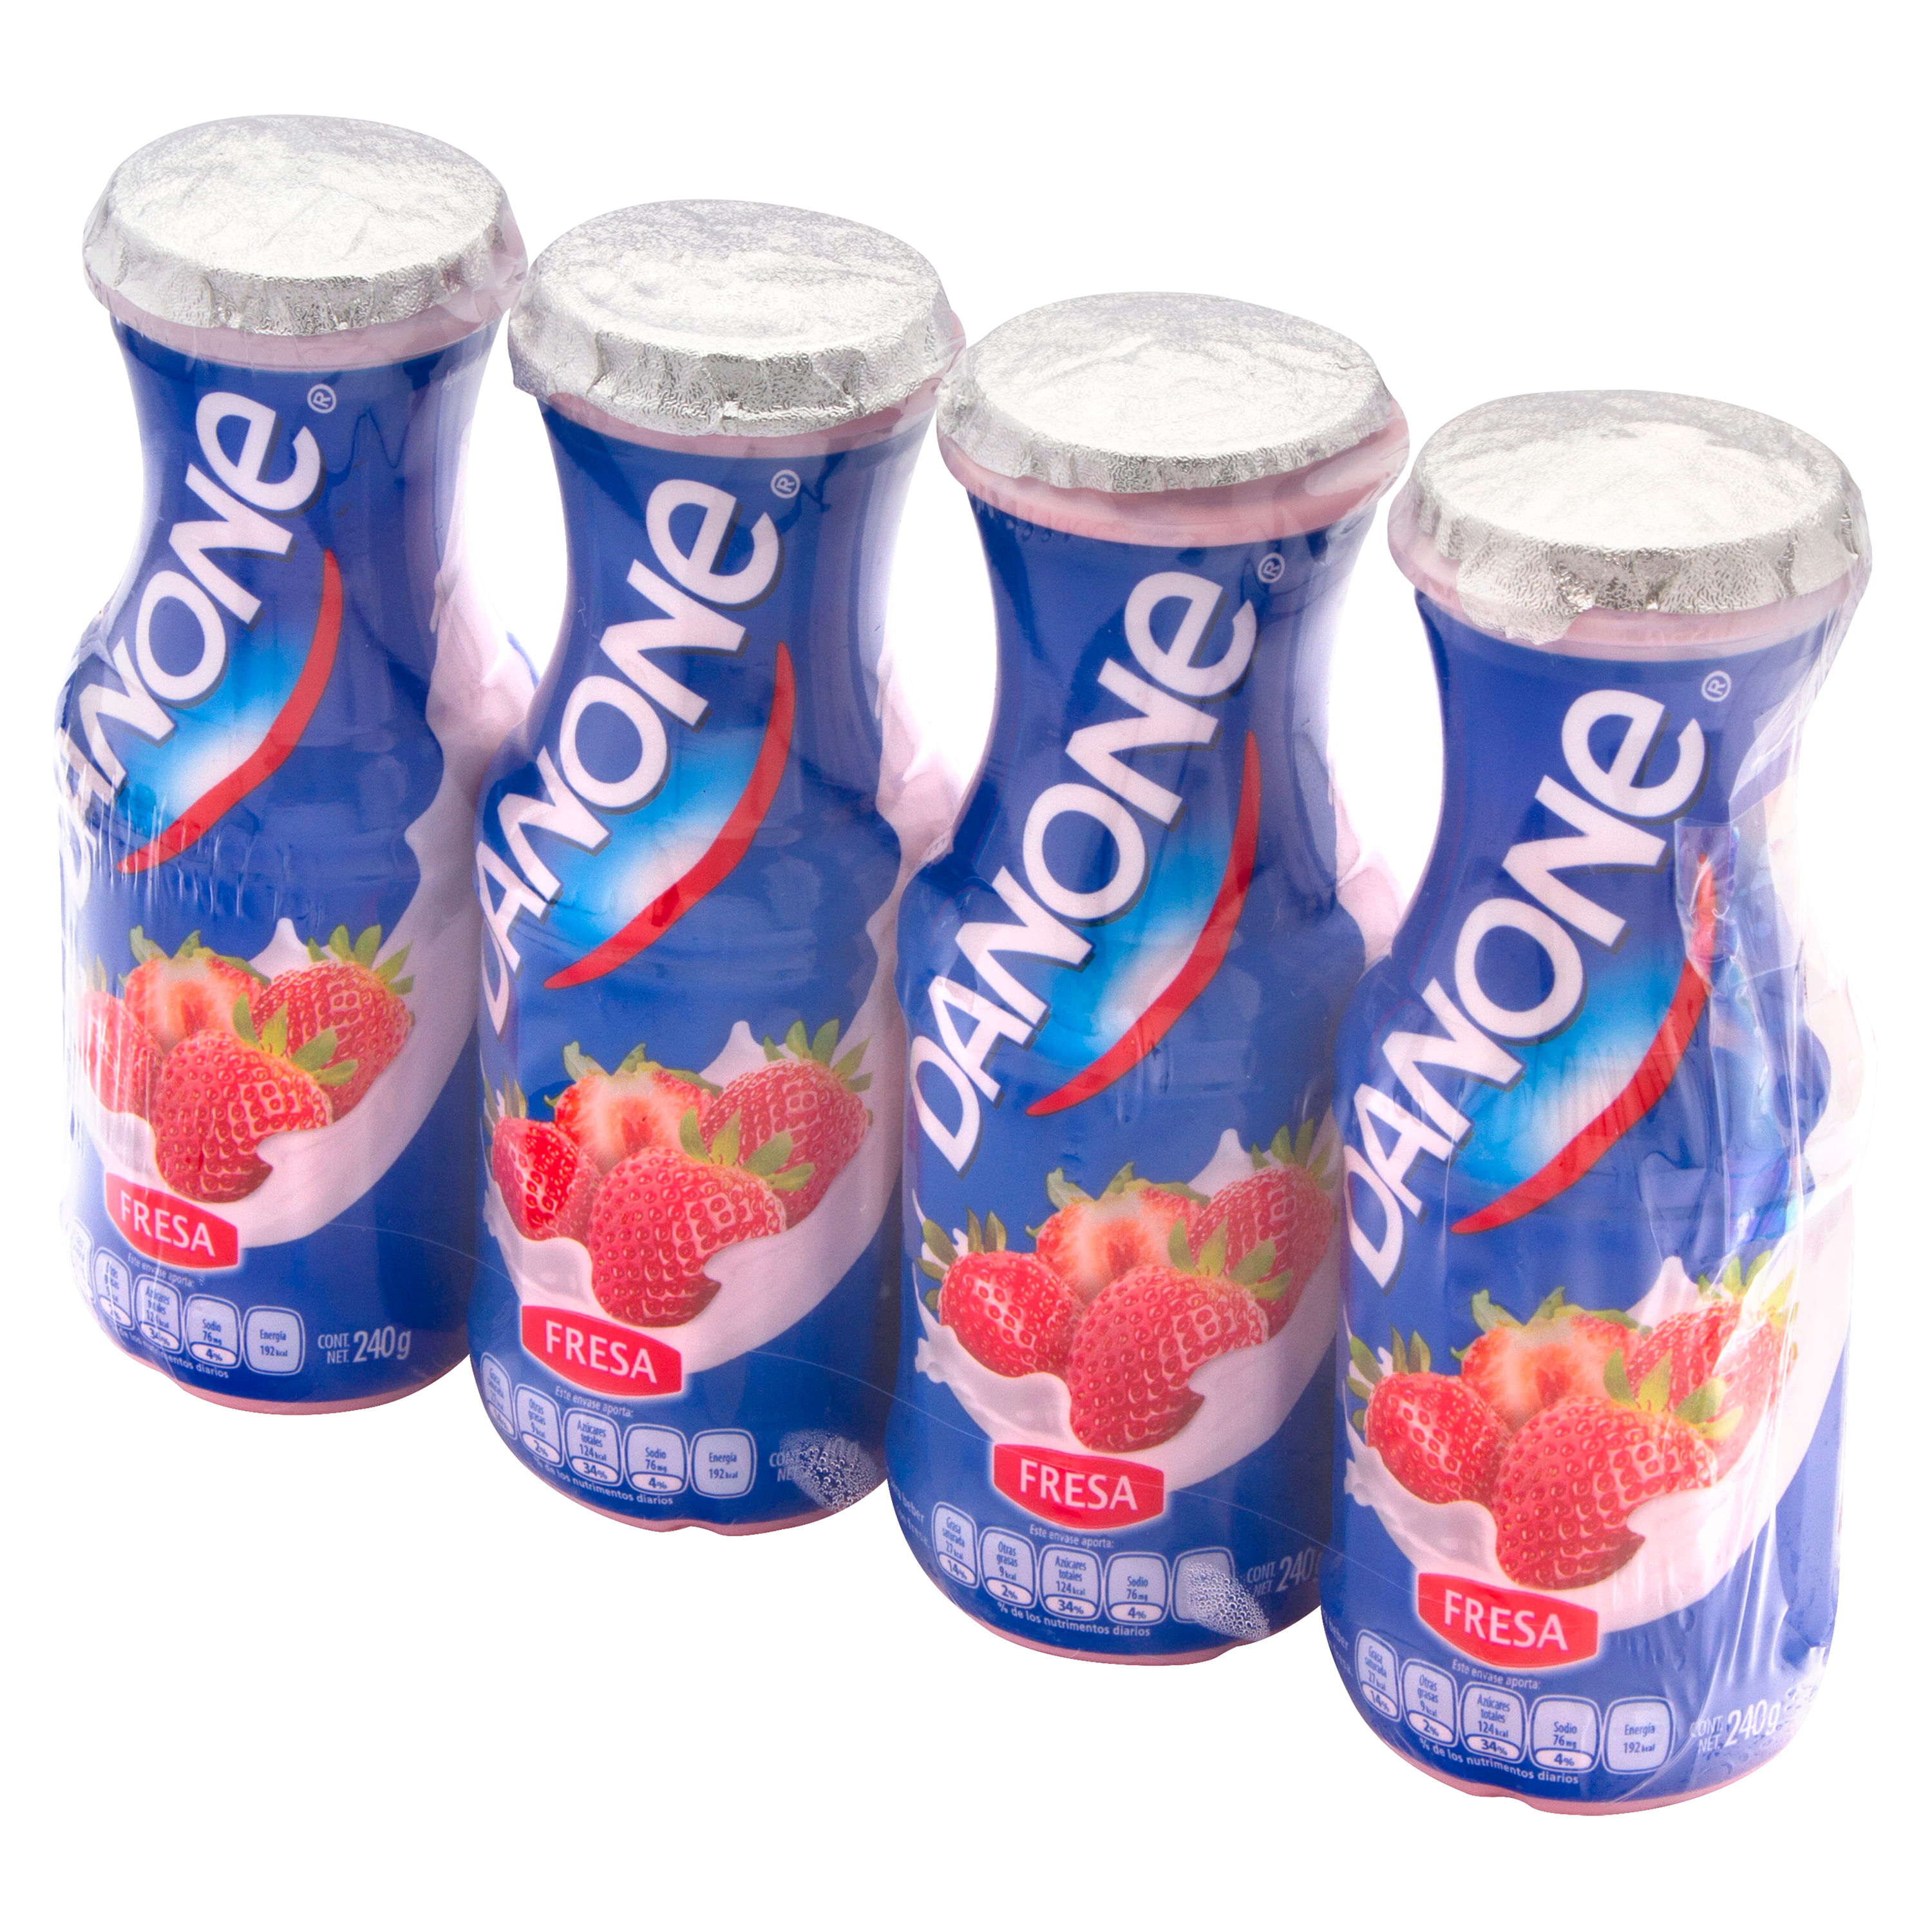 Comprar Yogur proteina fresa danone p4 en Supermercados MAS Online